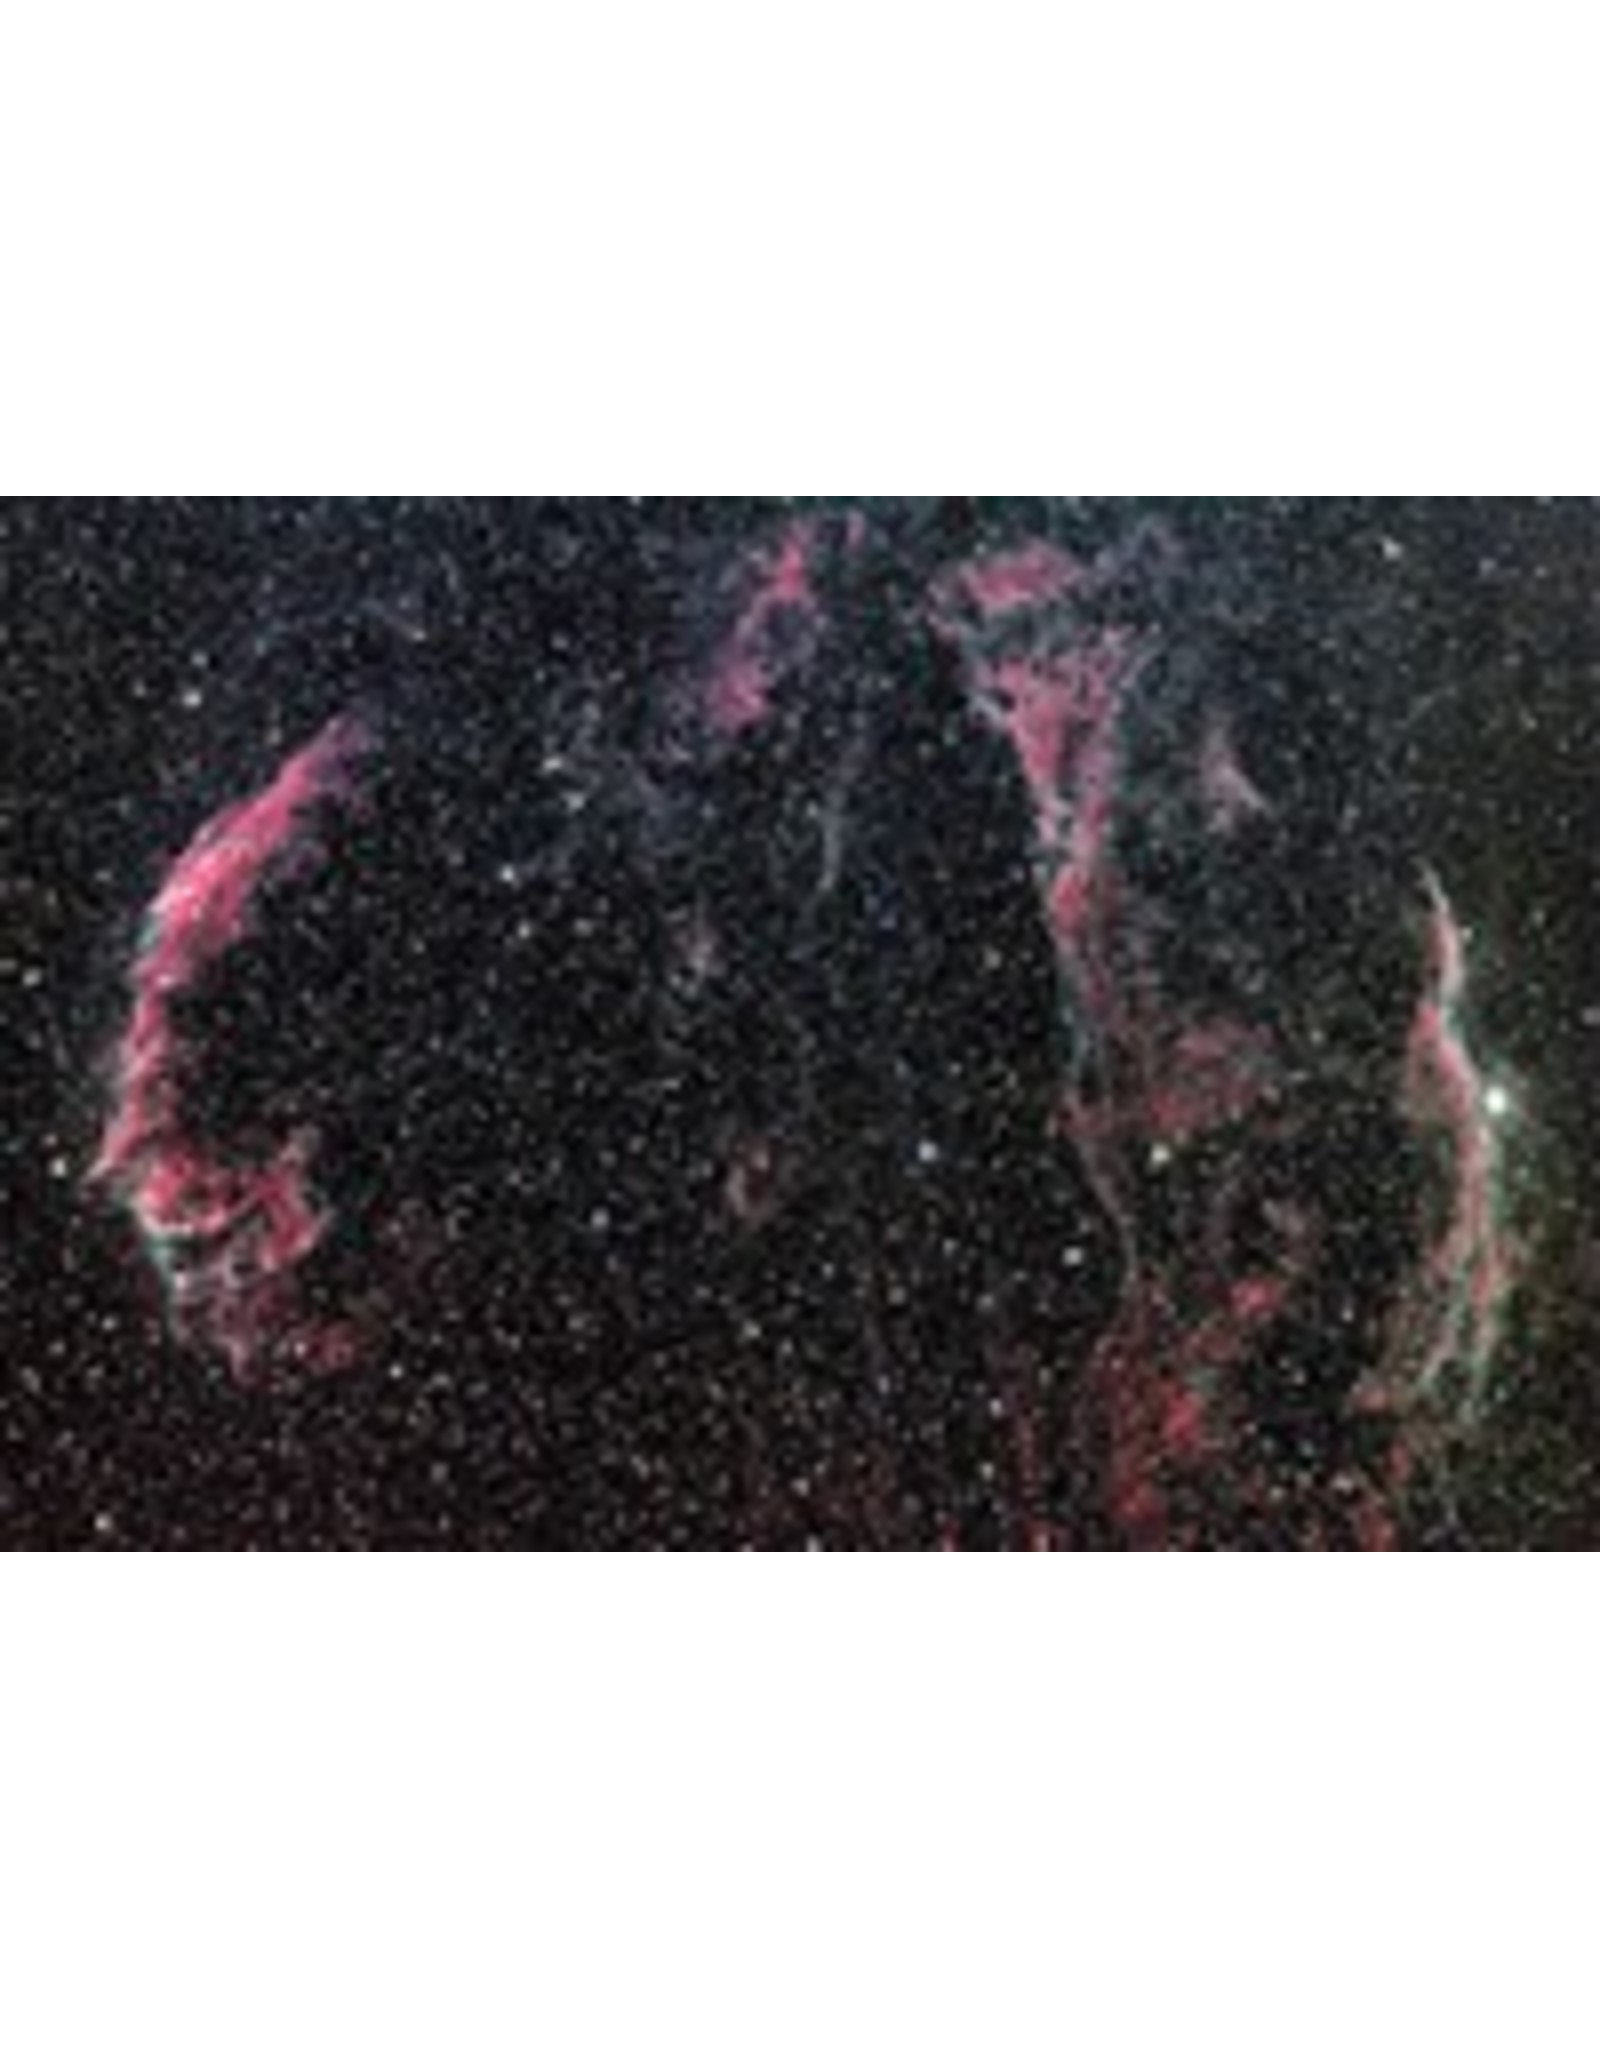 Tele Vue NP127is Nagler-Petzval APO Refractor Telescope OTA